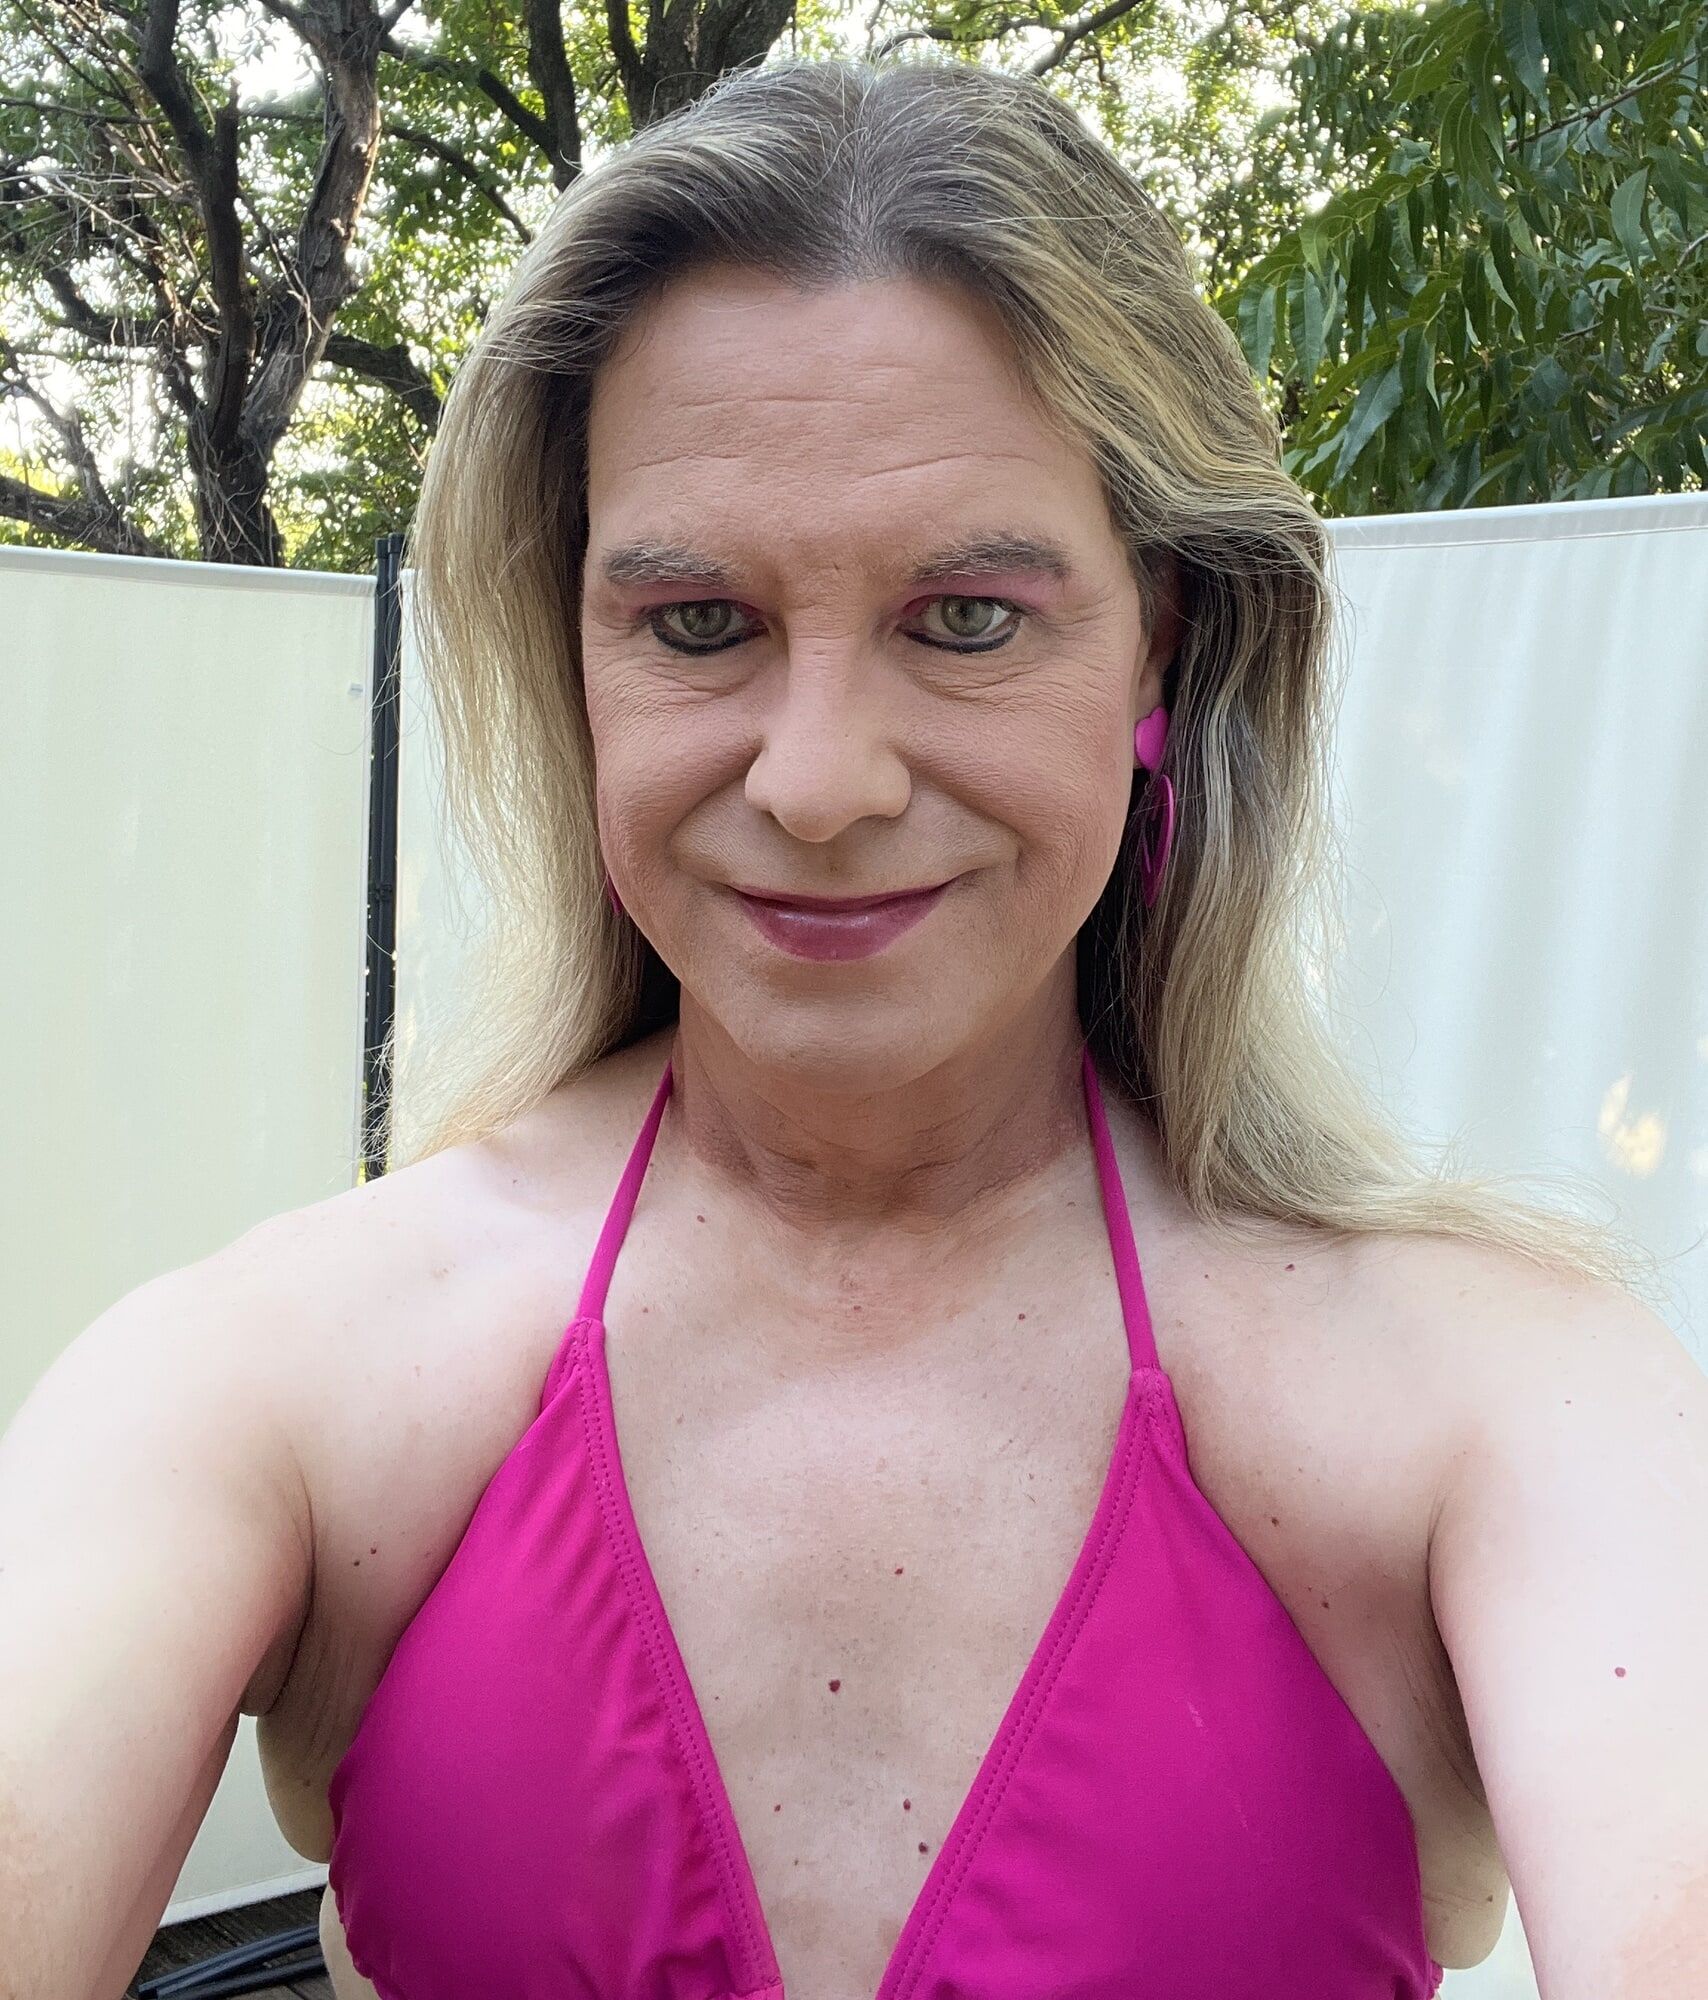 Joanie - Hot Pink Bikini